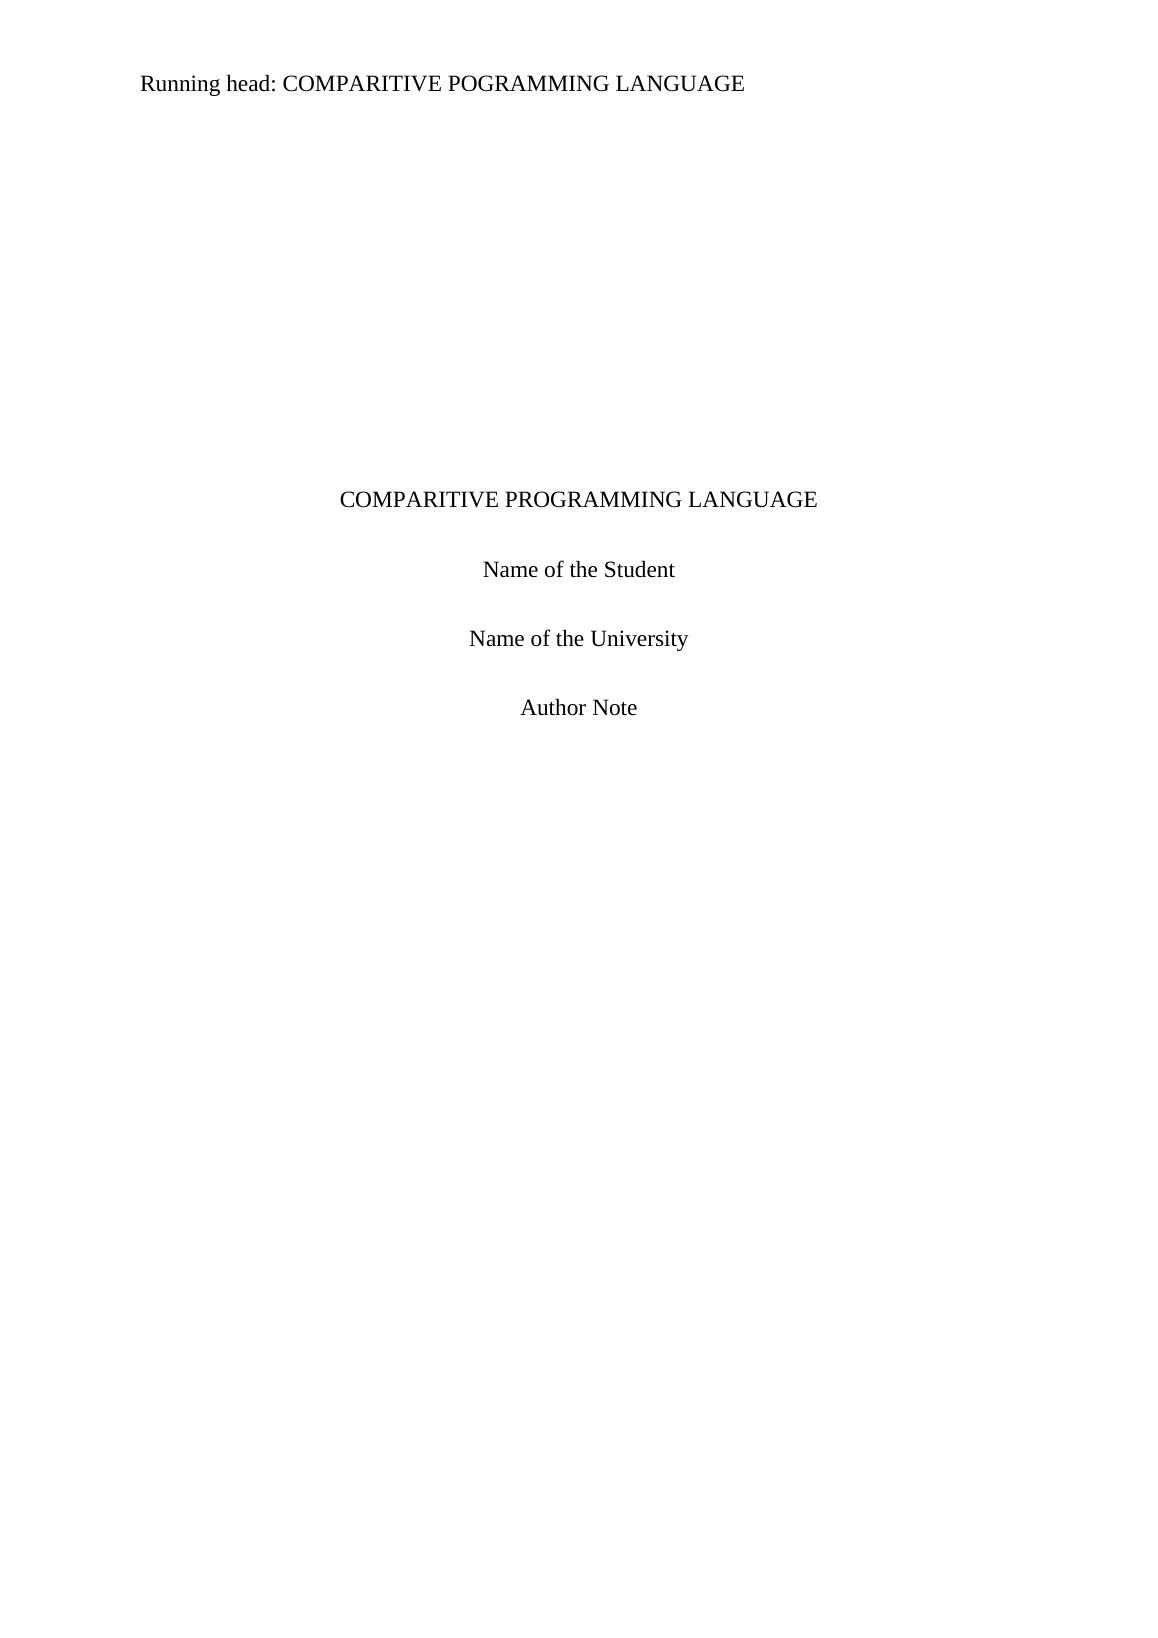 Comparative Programming Language Report 2022_1